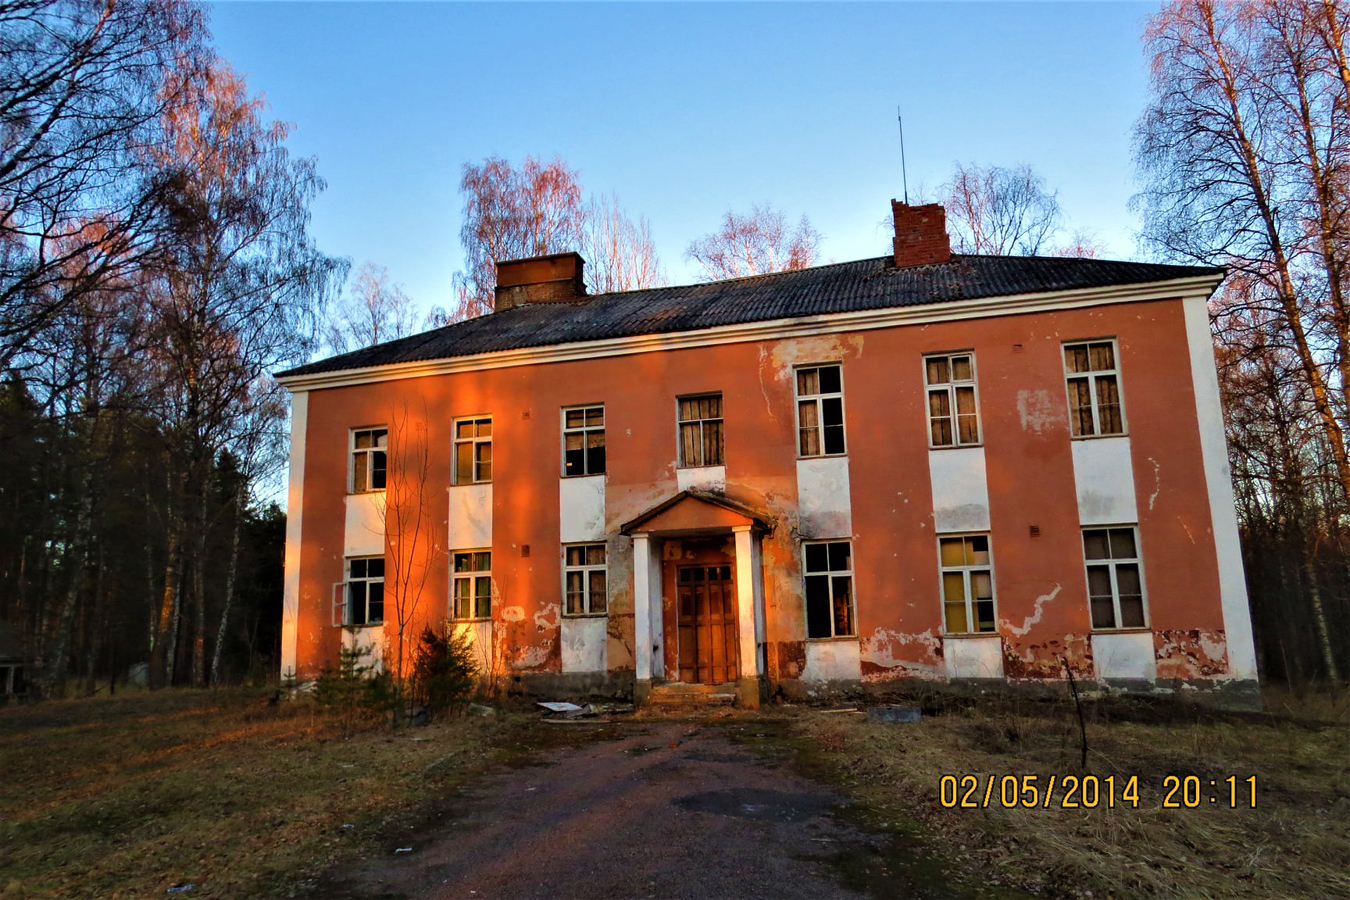 May 2, 2014. Uusikylä. Former Primary School